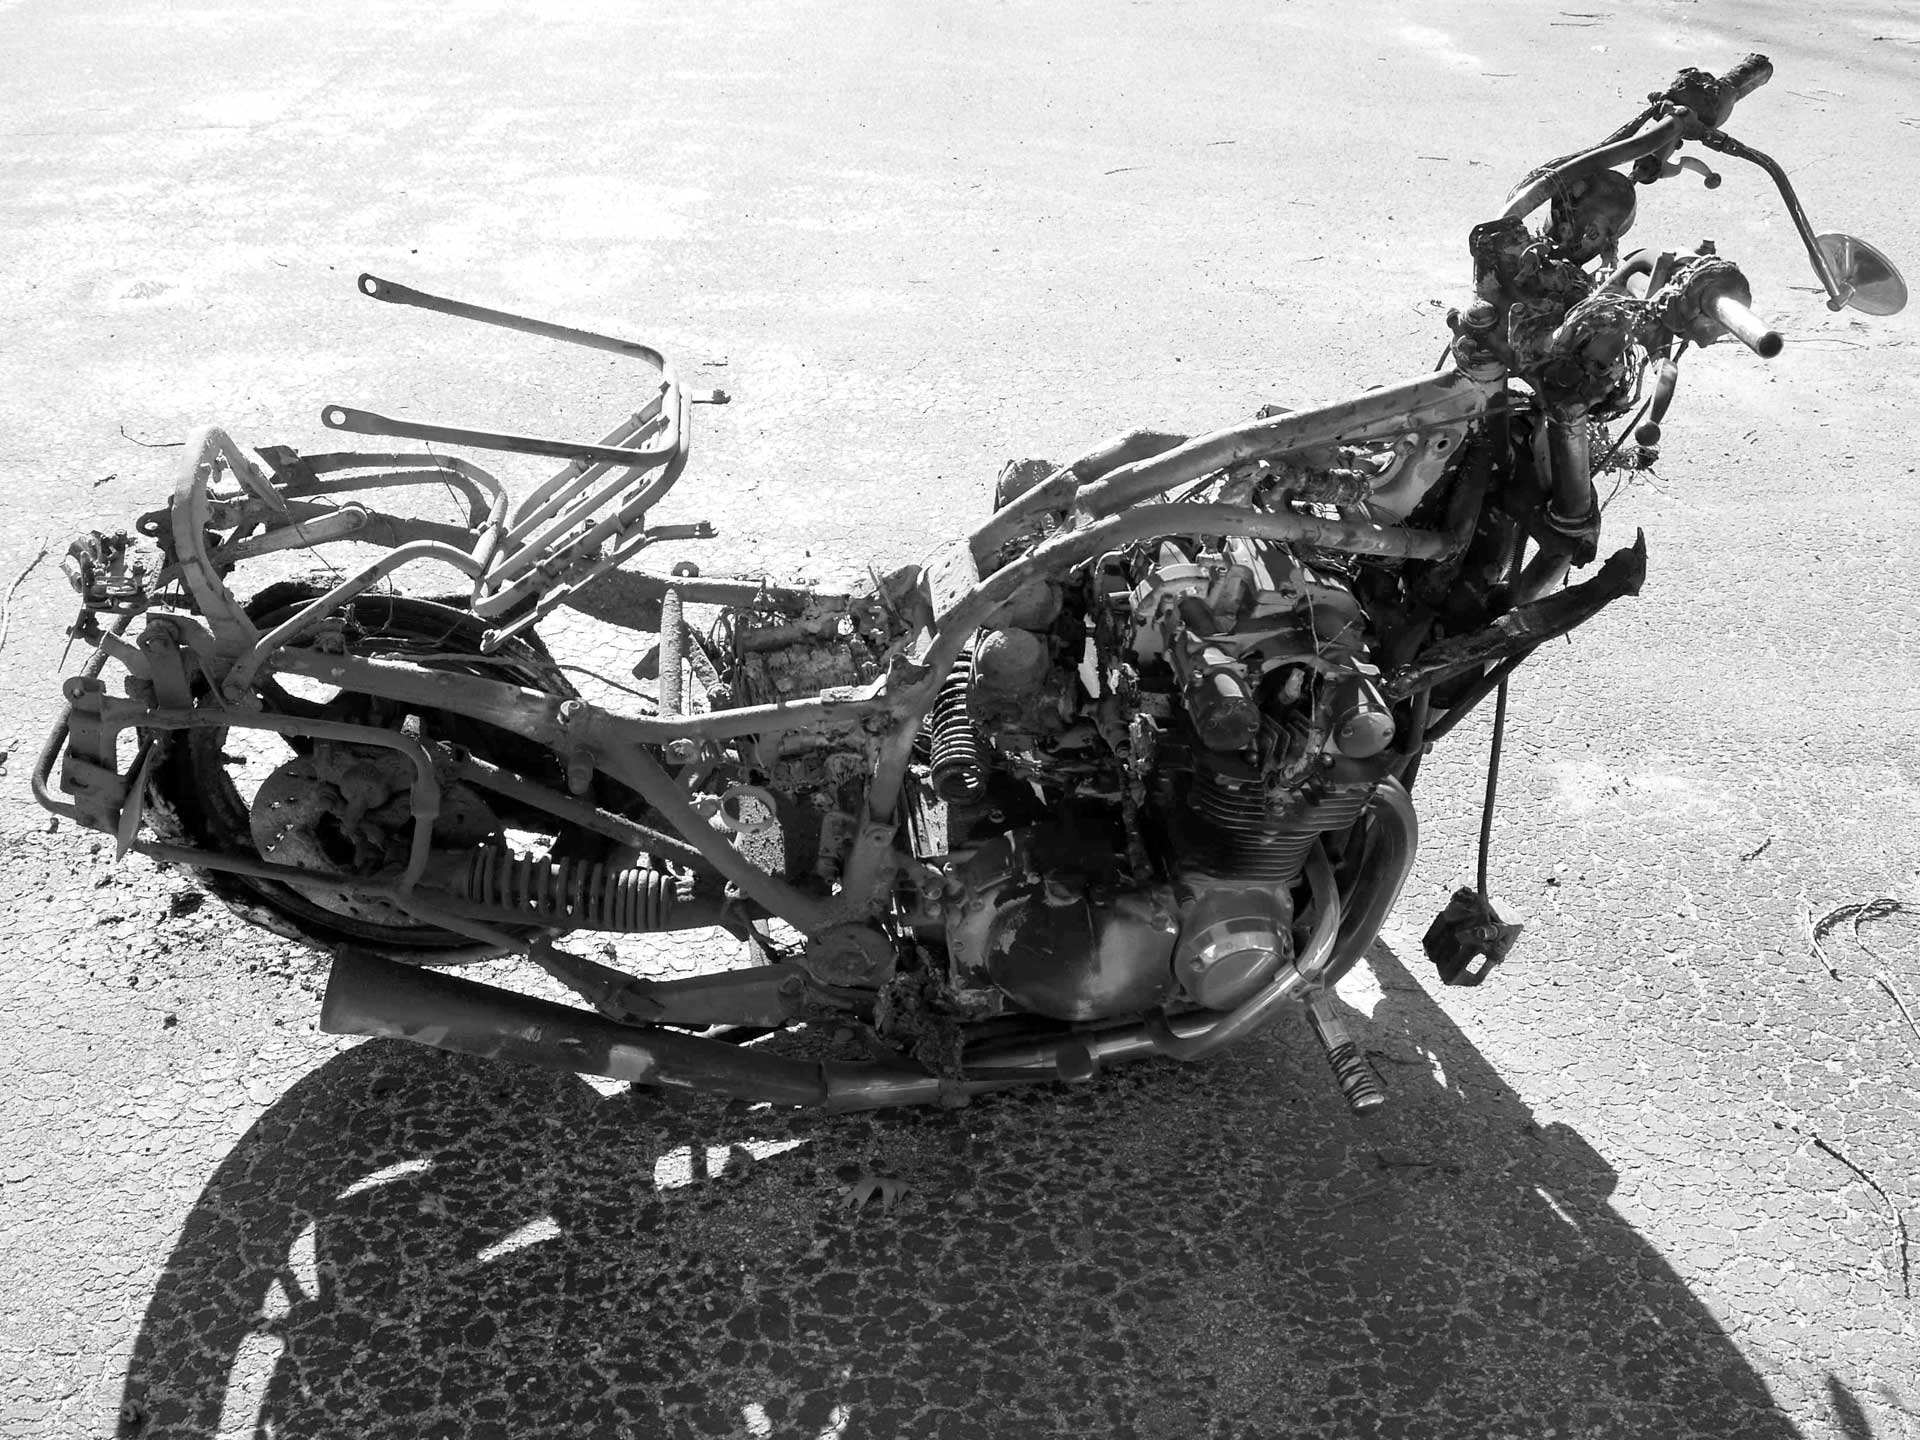 Motorcycle-Destruction-Accident-Picture